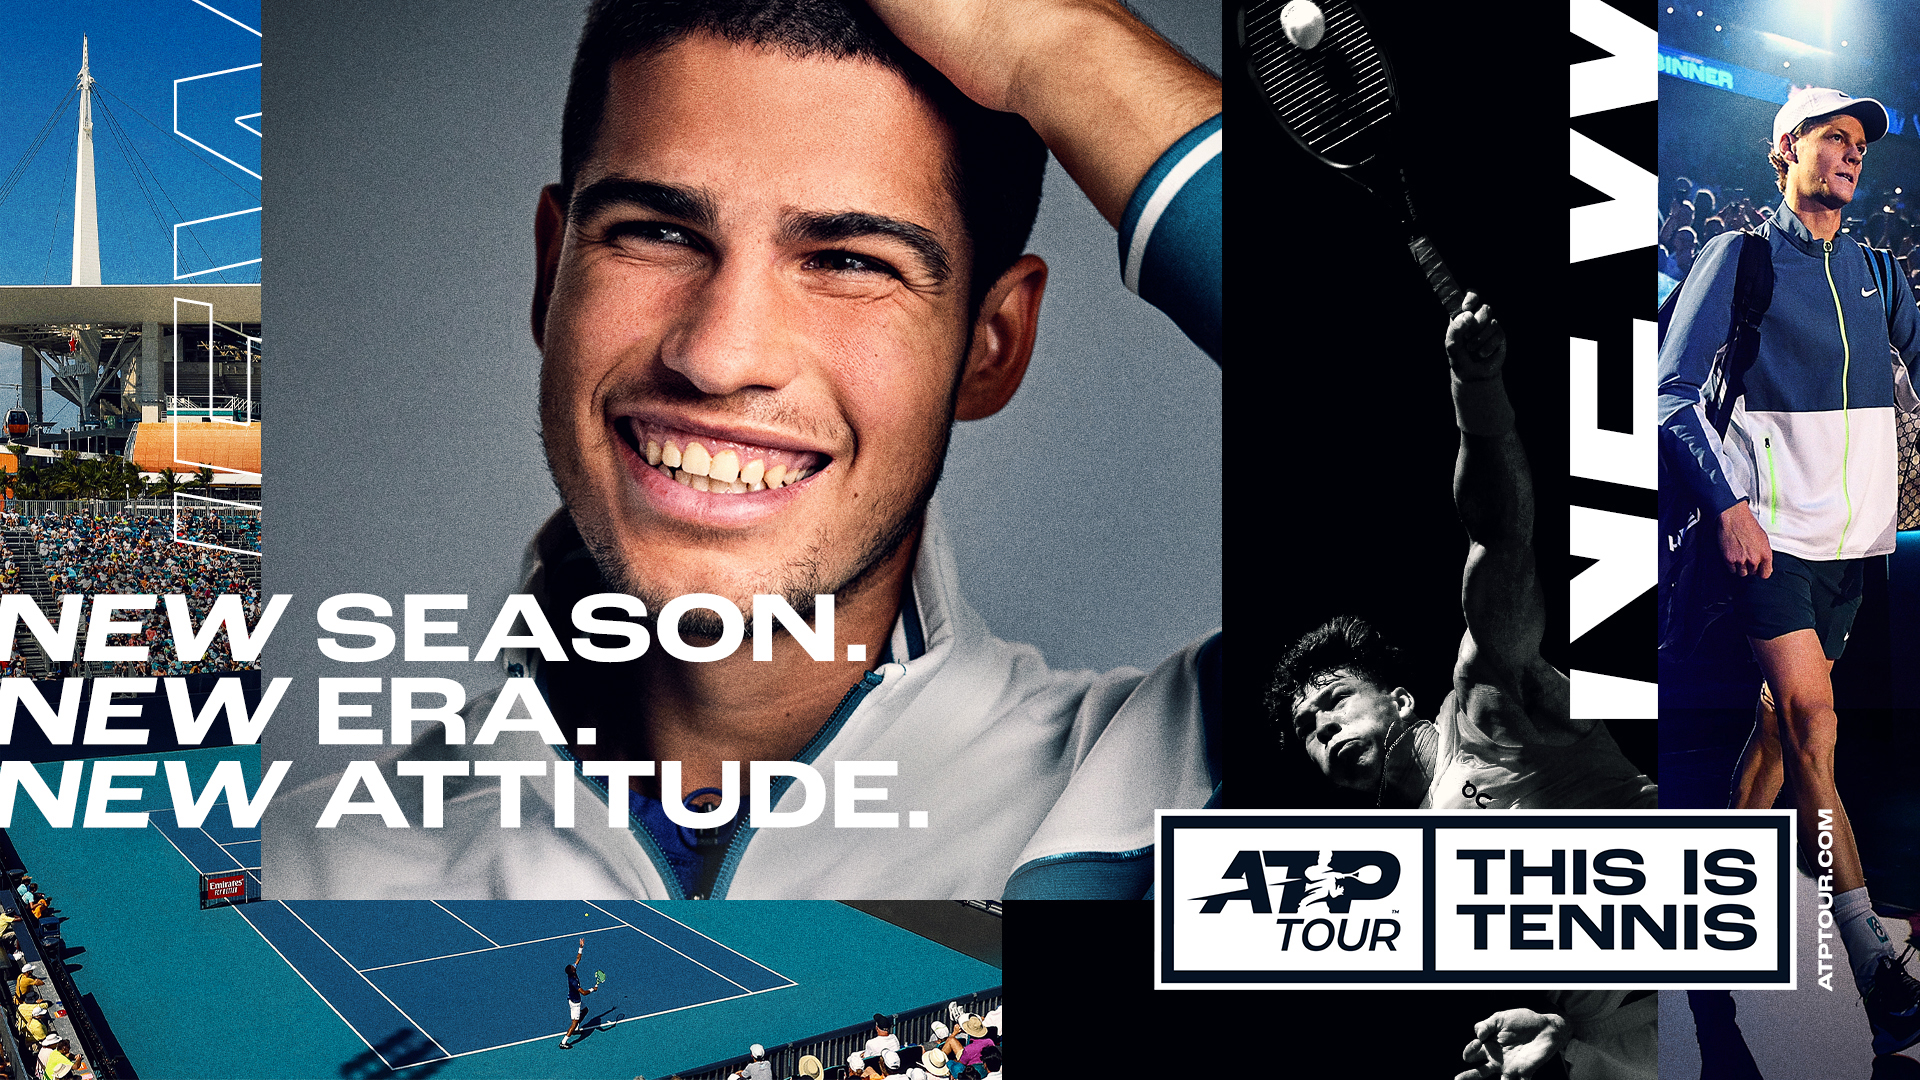 Carlos Alcaraz, Jannik Sinner and tennis court with New Season, New Era, New Attitude headline and ATP This Is Tennis logo